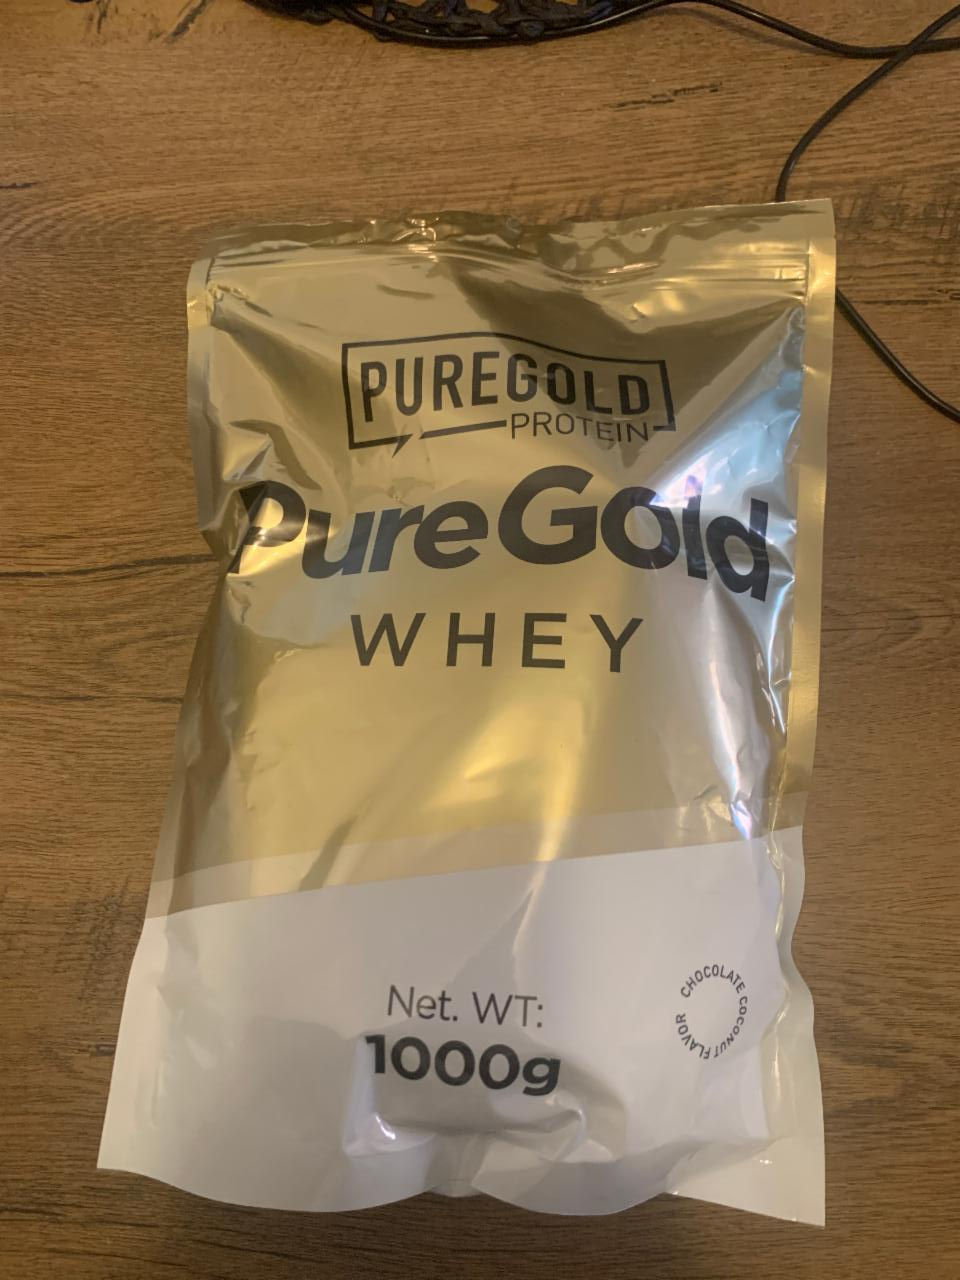 Képek - PureGold whey Puregold protein